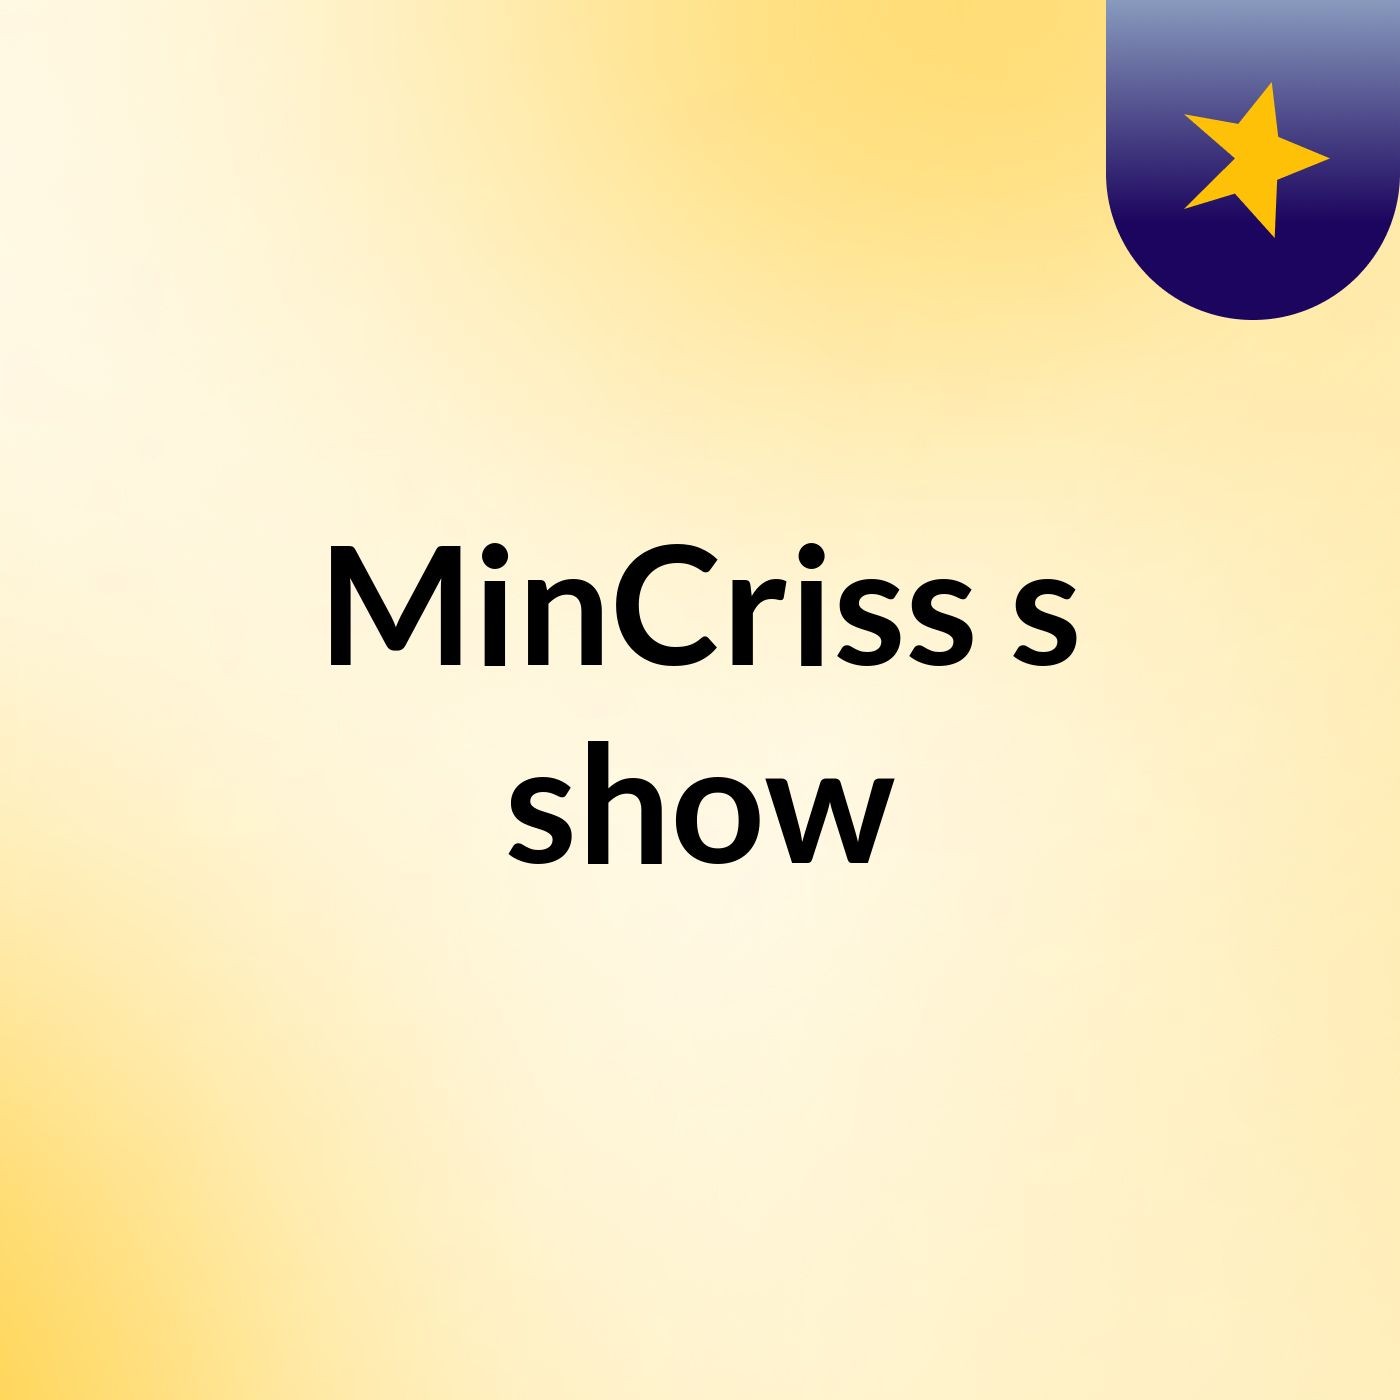 MinCriss's show